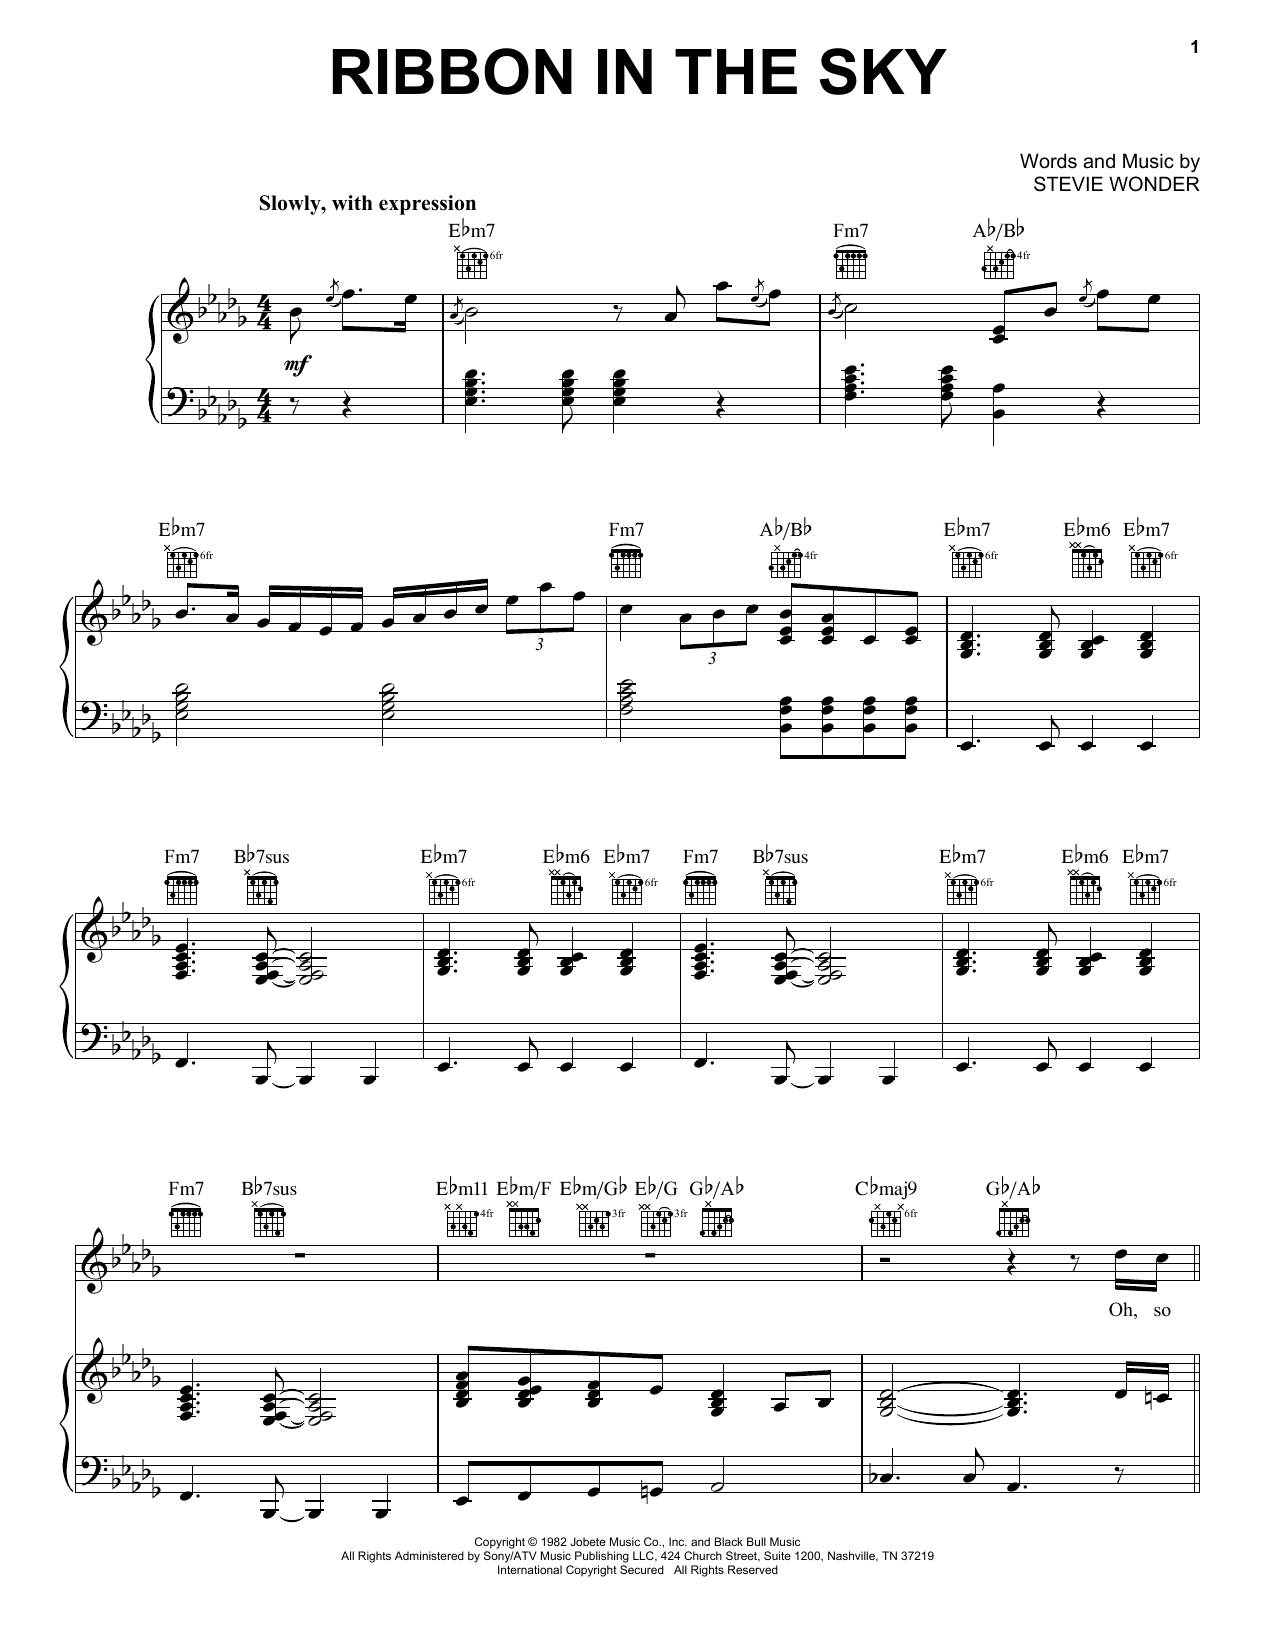 Stevie Wonder Ribbon In The Sky Sheet Music Notes & Chords for Ukulele - Download or Print PDF